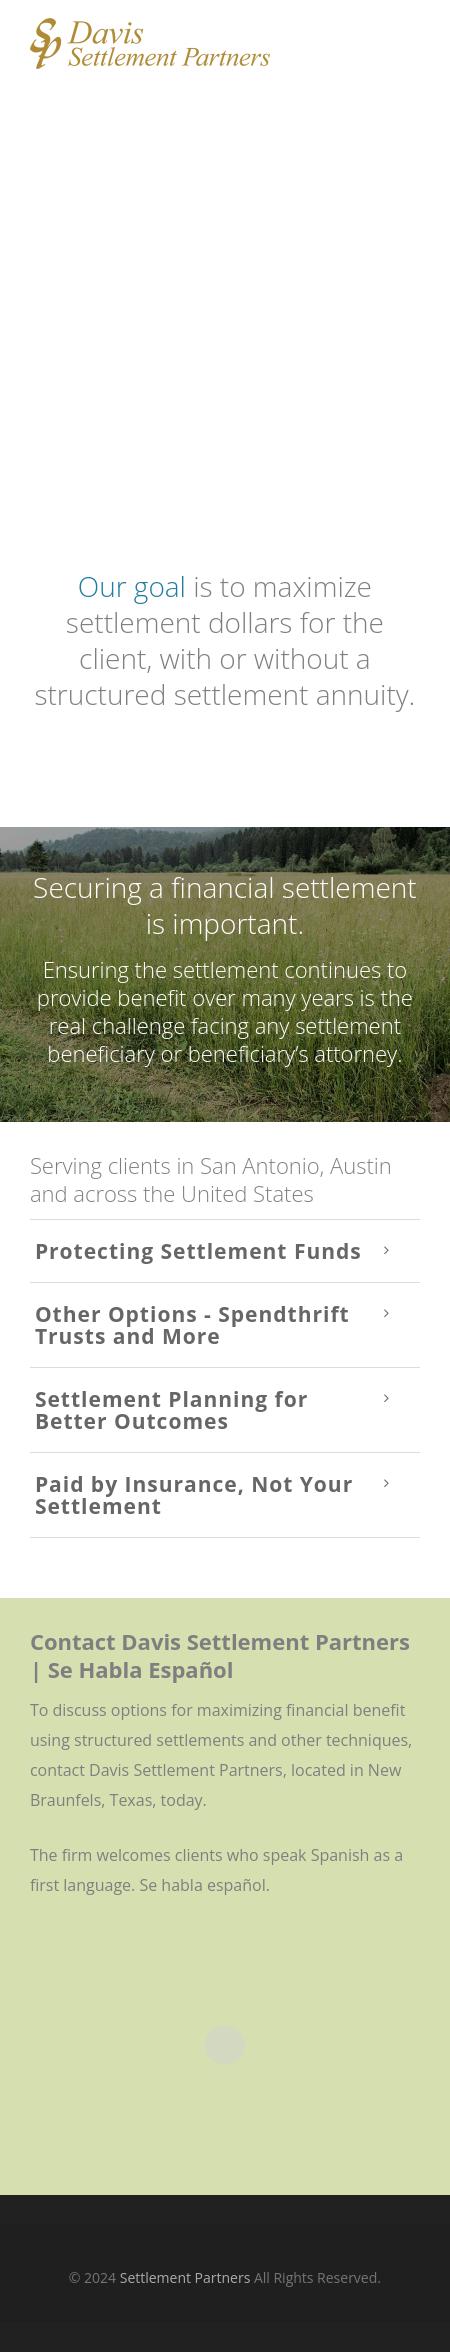 Davis Settlement Partners - New Braunfels TX Lawyers